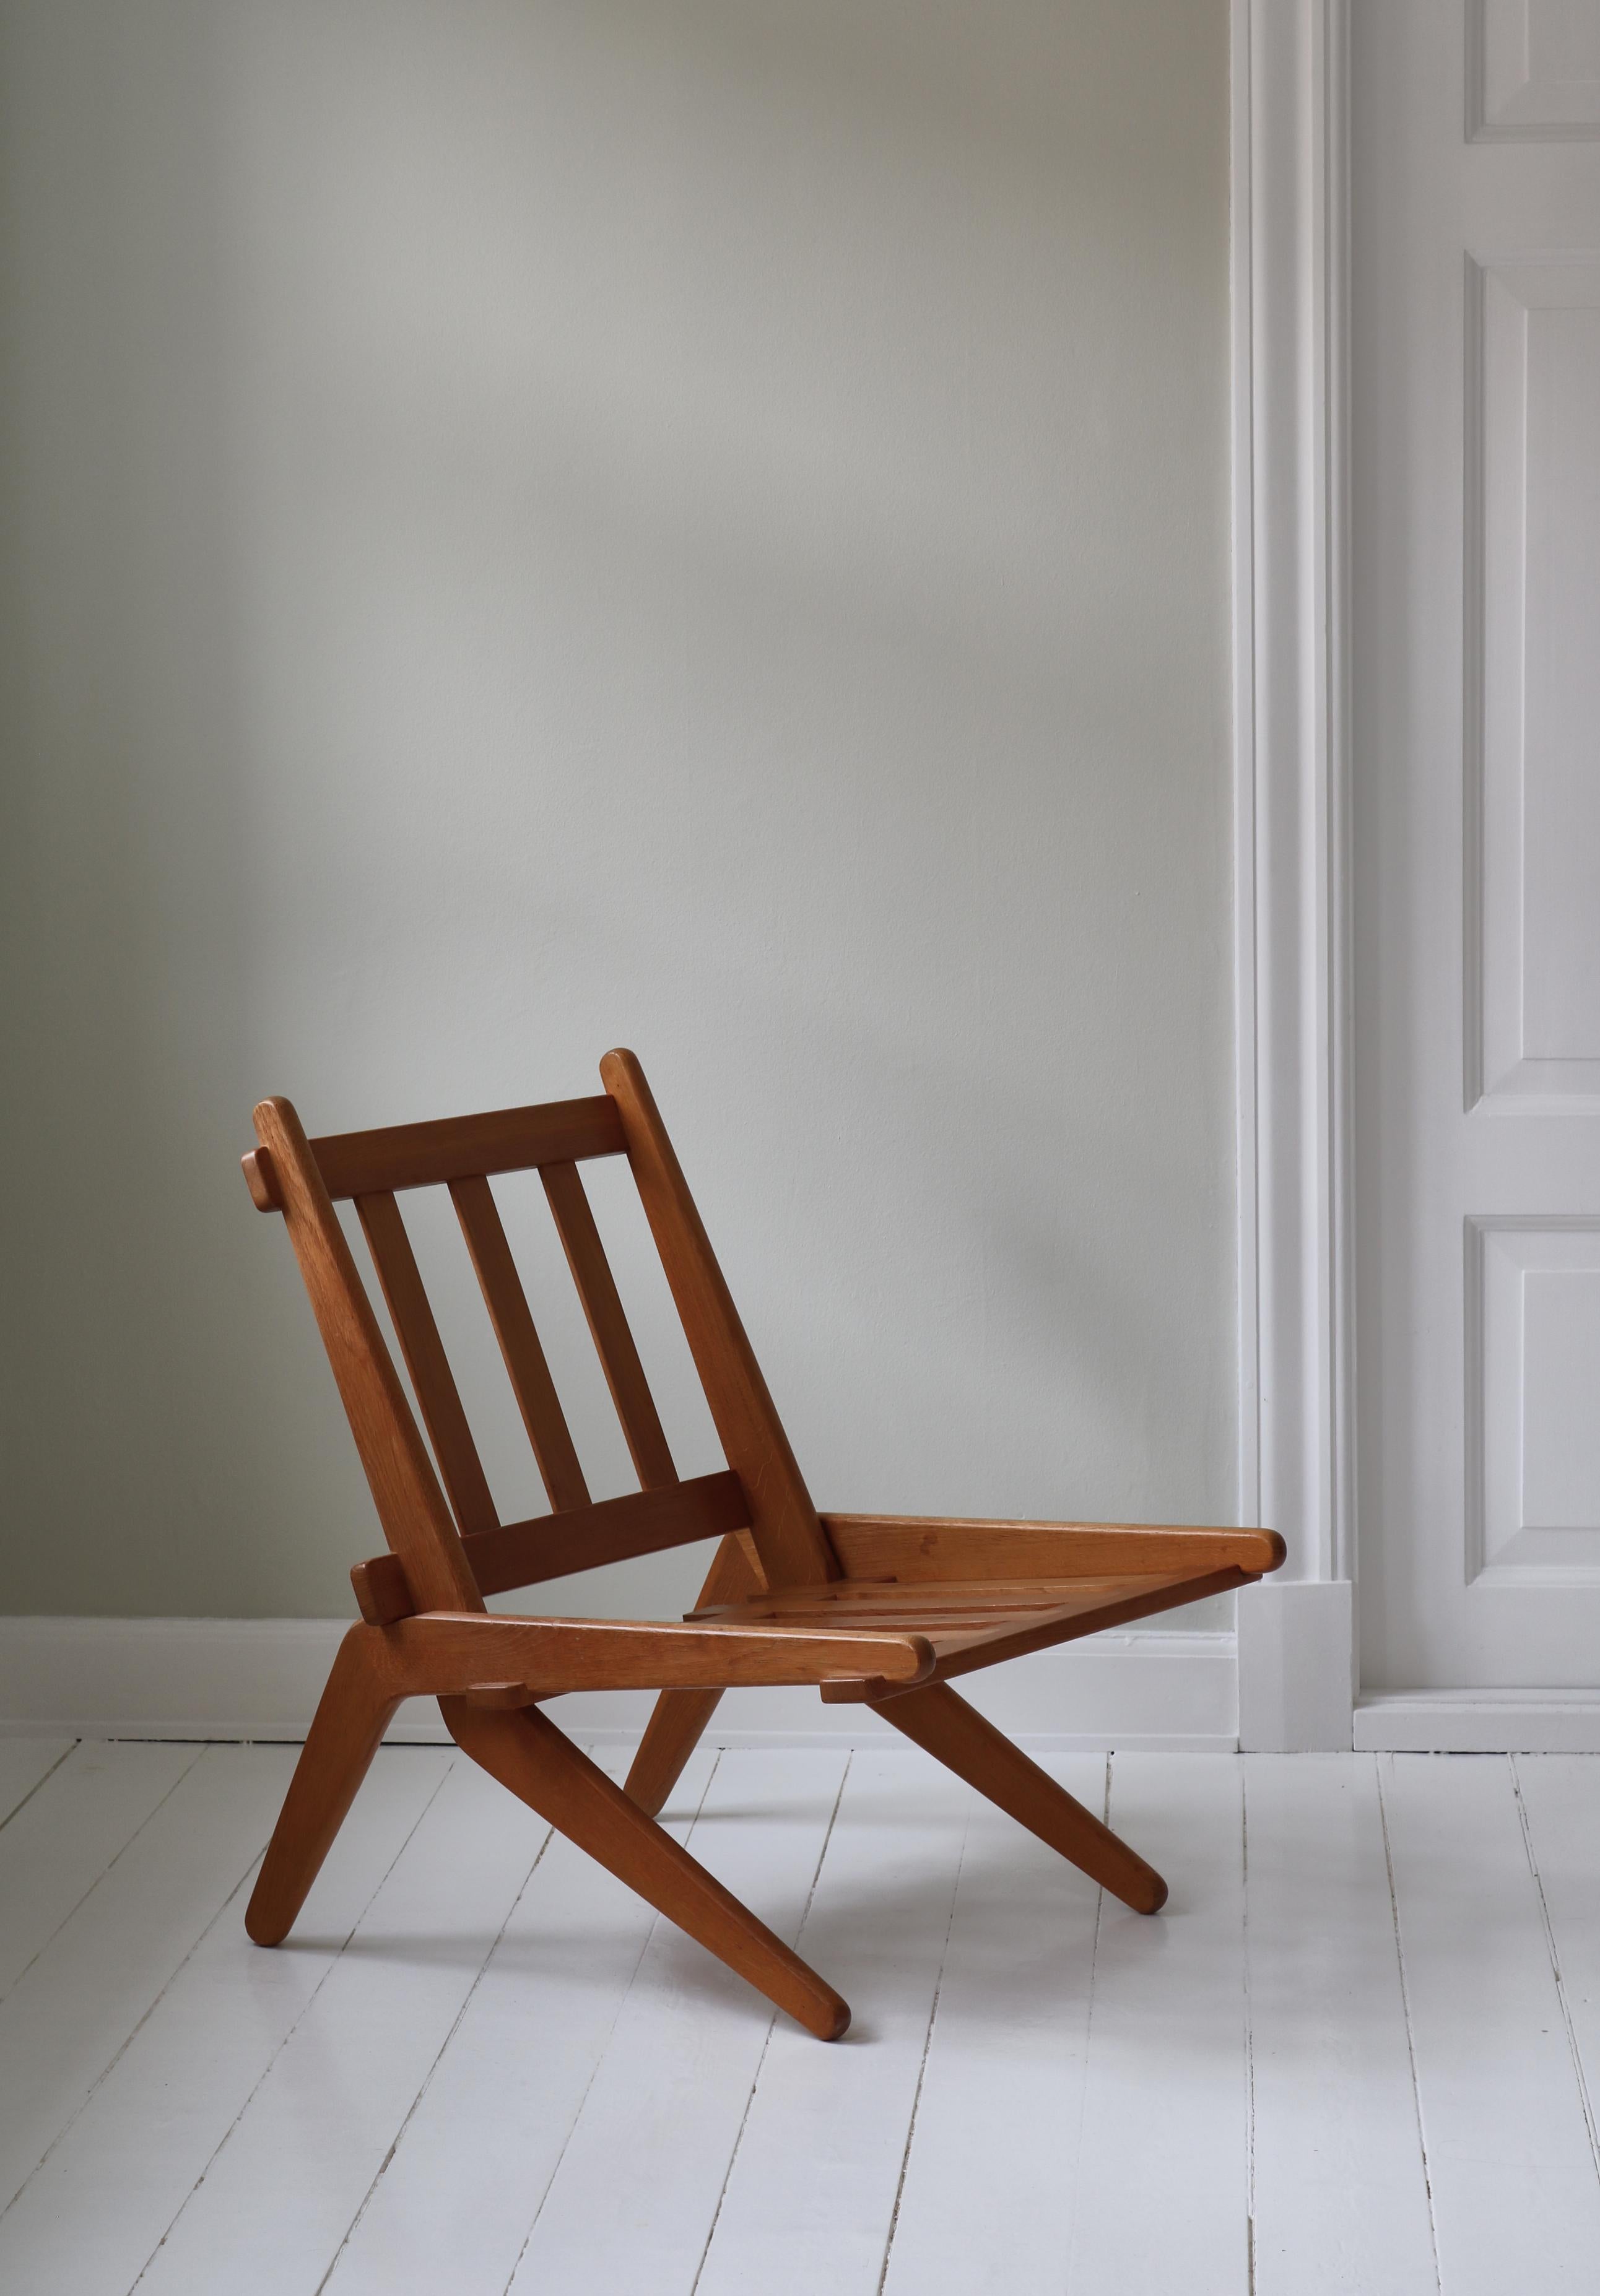 Danish Modern Folding Chair in Oak and Natural Sheepskin, Preben Thorsen, 1950s For Sale 14